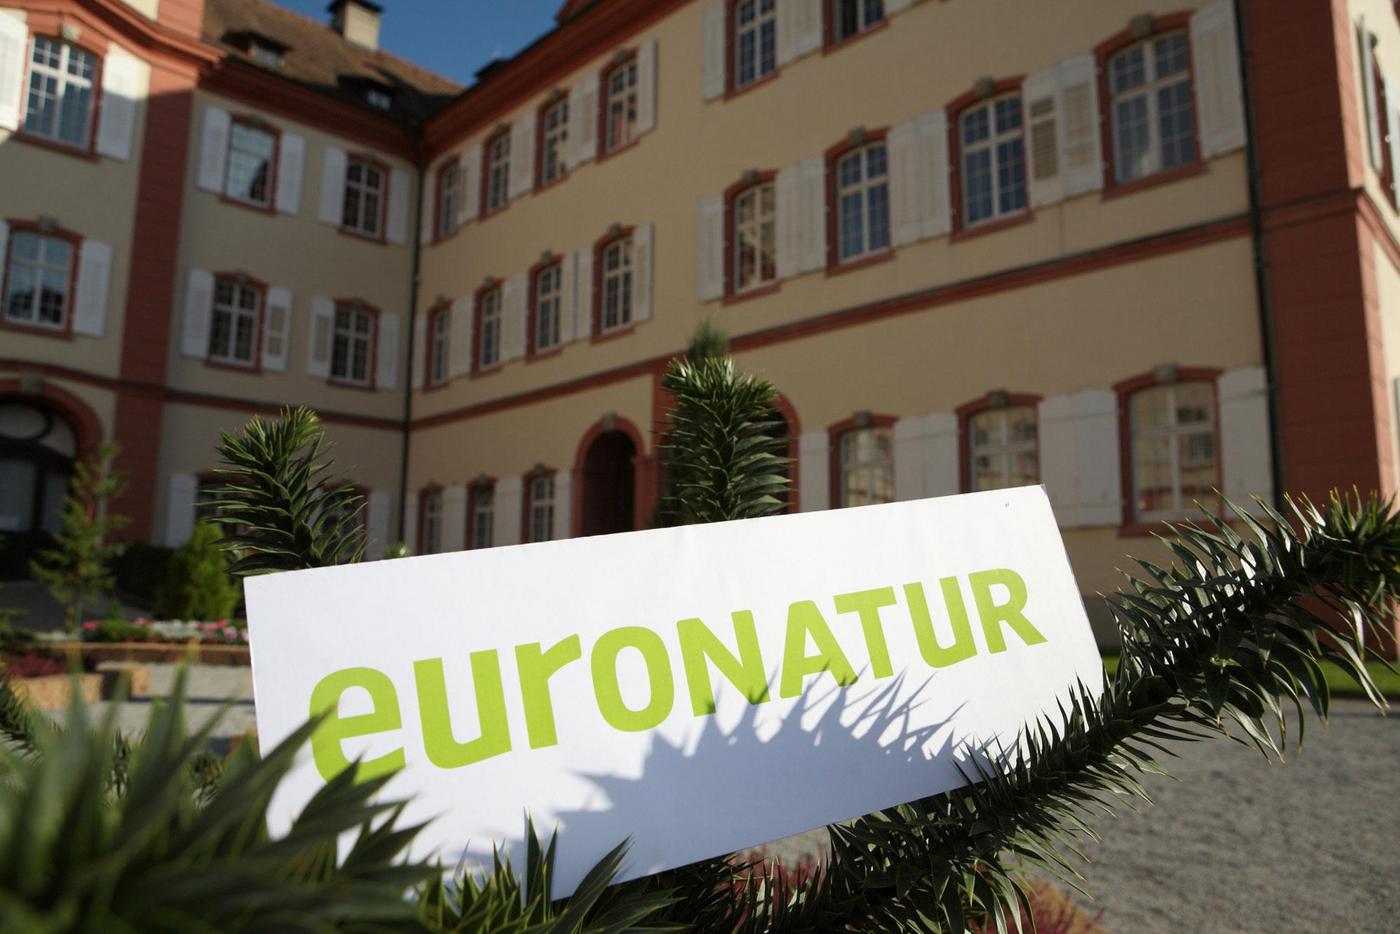 EuroNatur in front of castle Mainau